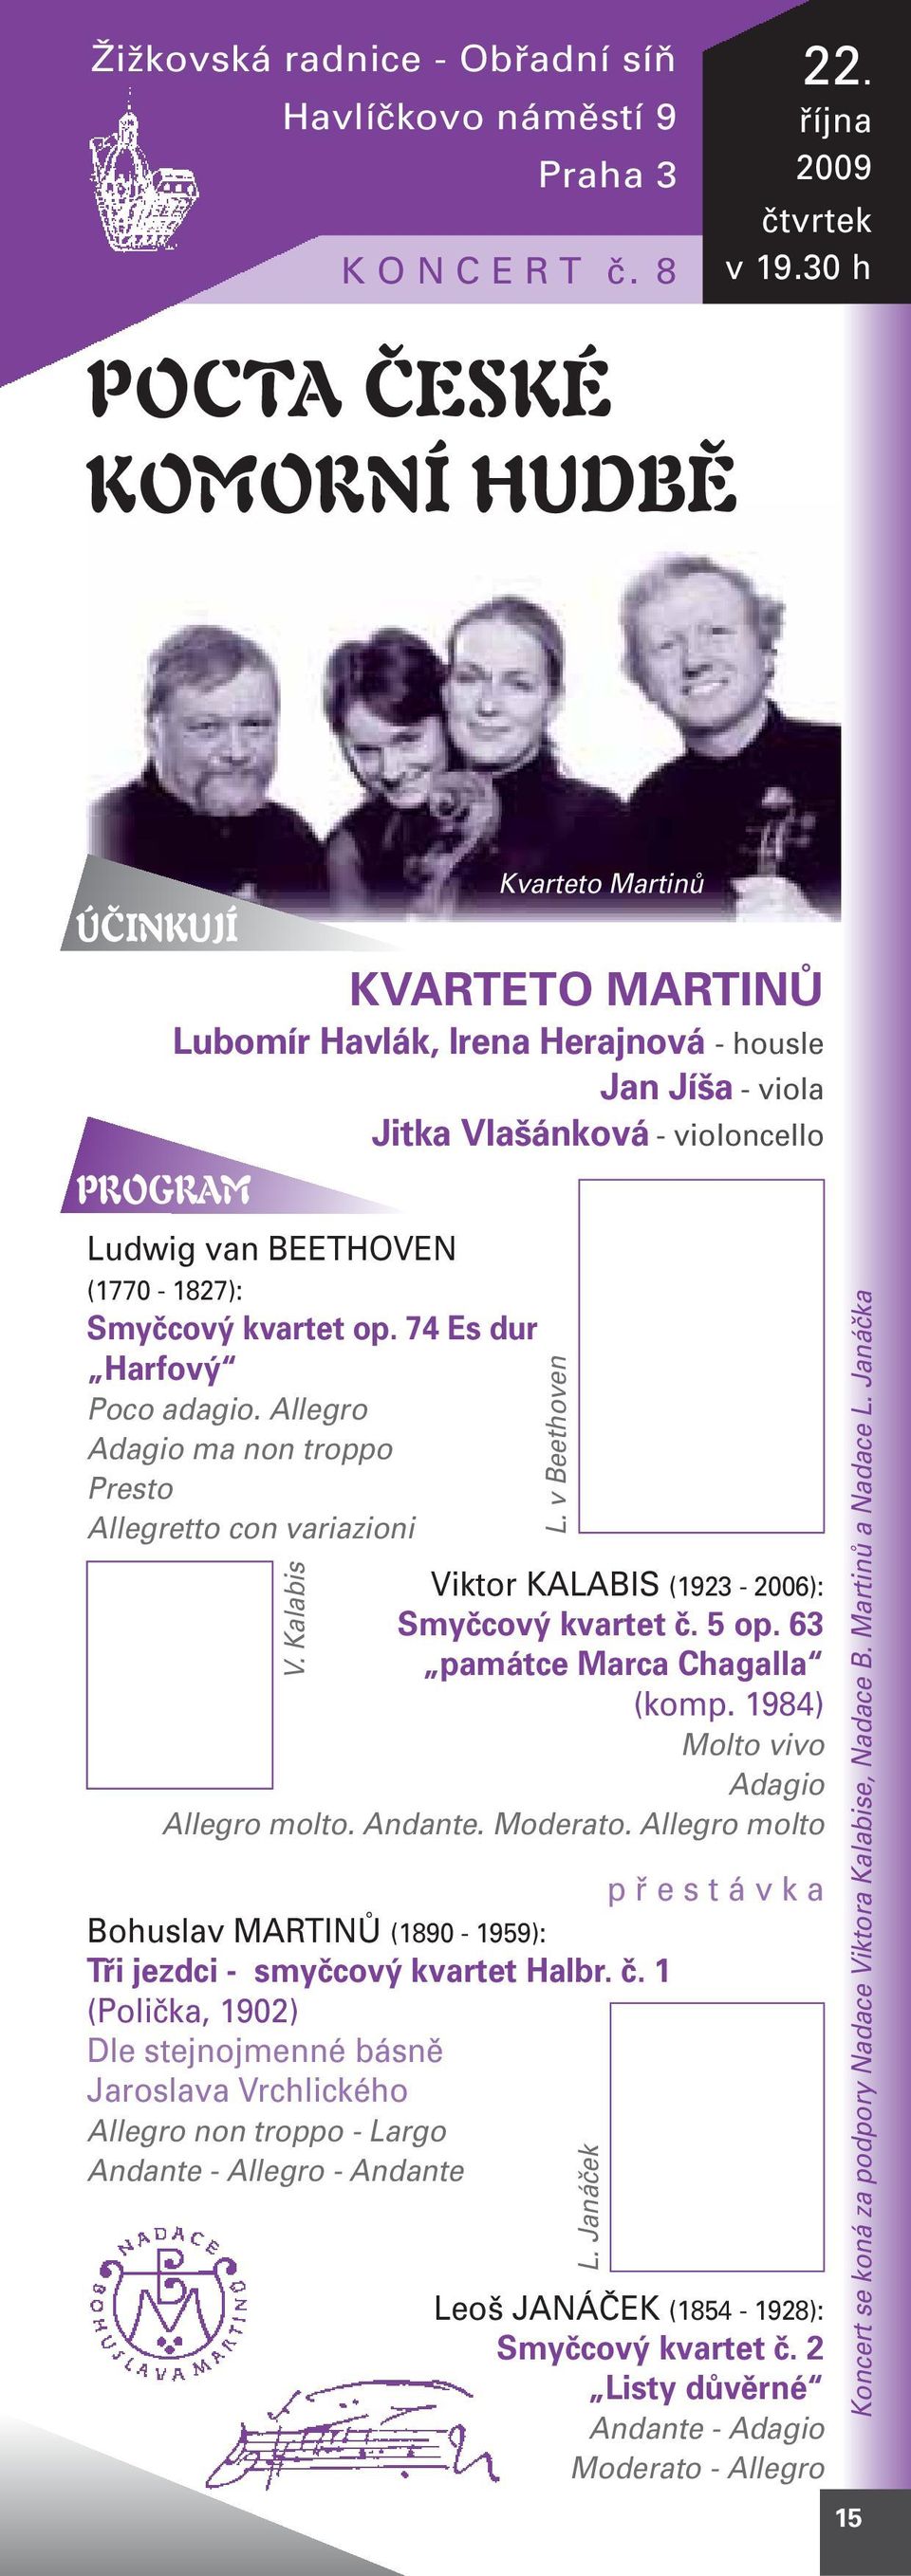 kvartet op. 74 Es dur Harfový Poco adagio. Allegro Adagio ma non troppo Presto Allegretto con variazioni Viktor KALABIS (1923-2006): Smyčcový kvartet č. 5 op. 63 památce Marca Chagalla (komp.